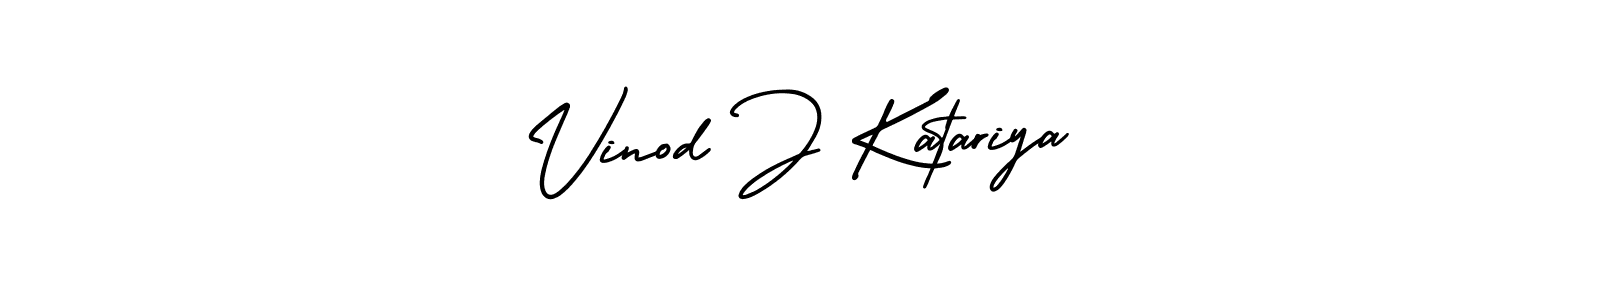 Design your own signature with our free online signature maker. With this signature software, you can create a handwritten (AmerikaSignatureDemo-Regular) signature for name Vinod J Katariya. Vinod J Katariya signature style 3 images and pictures png